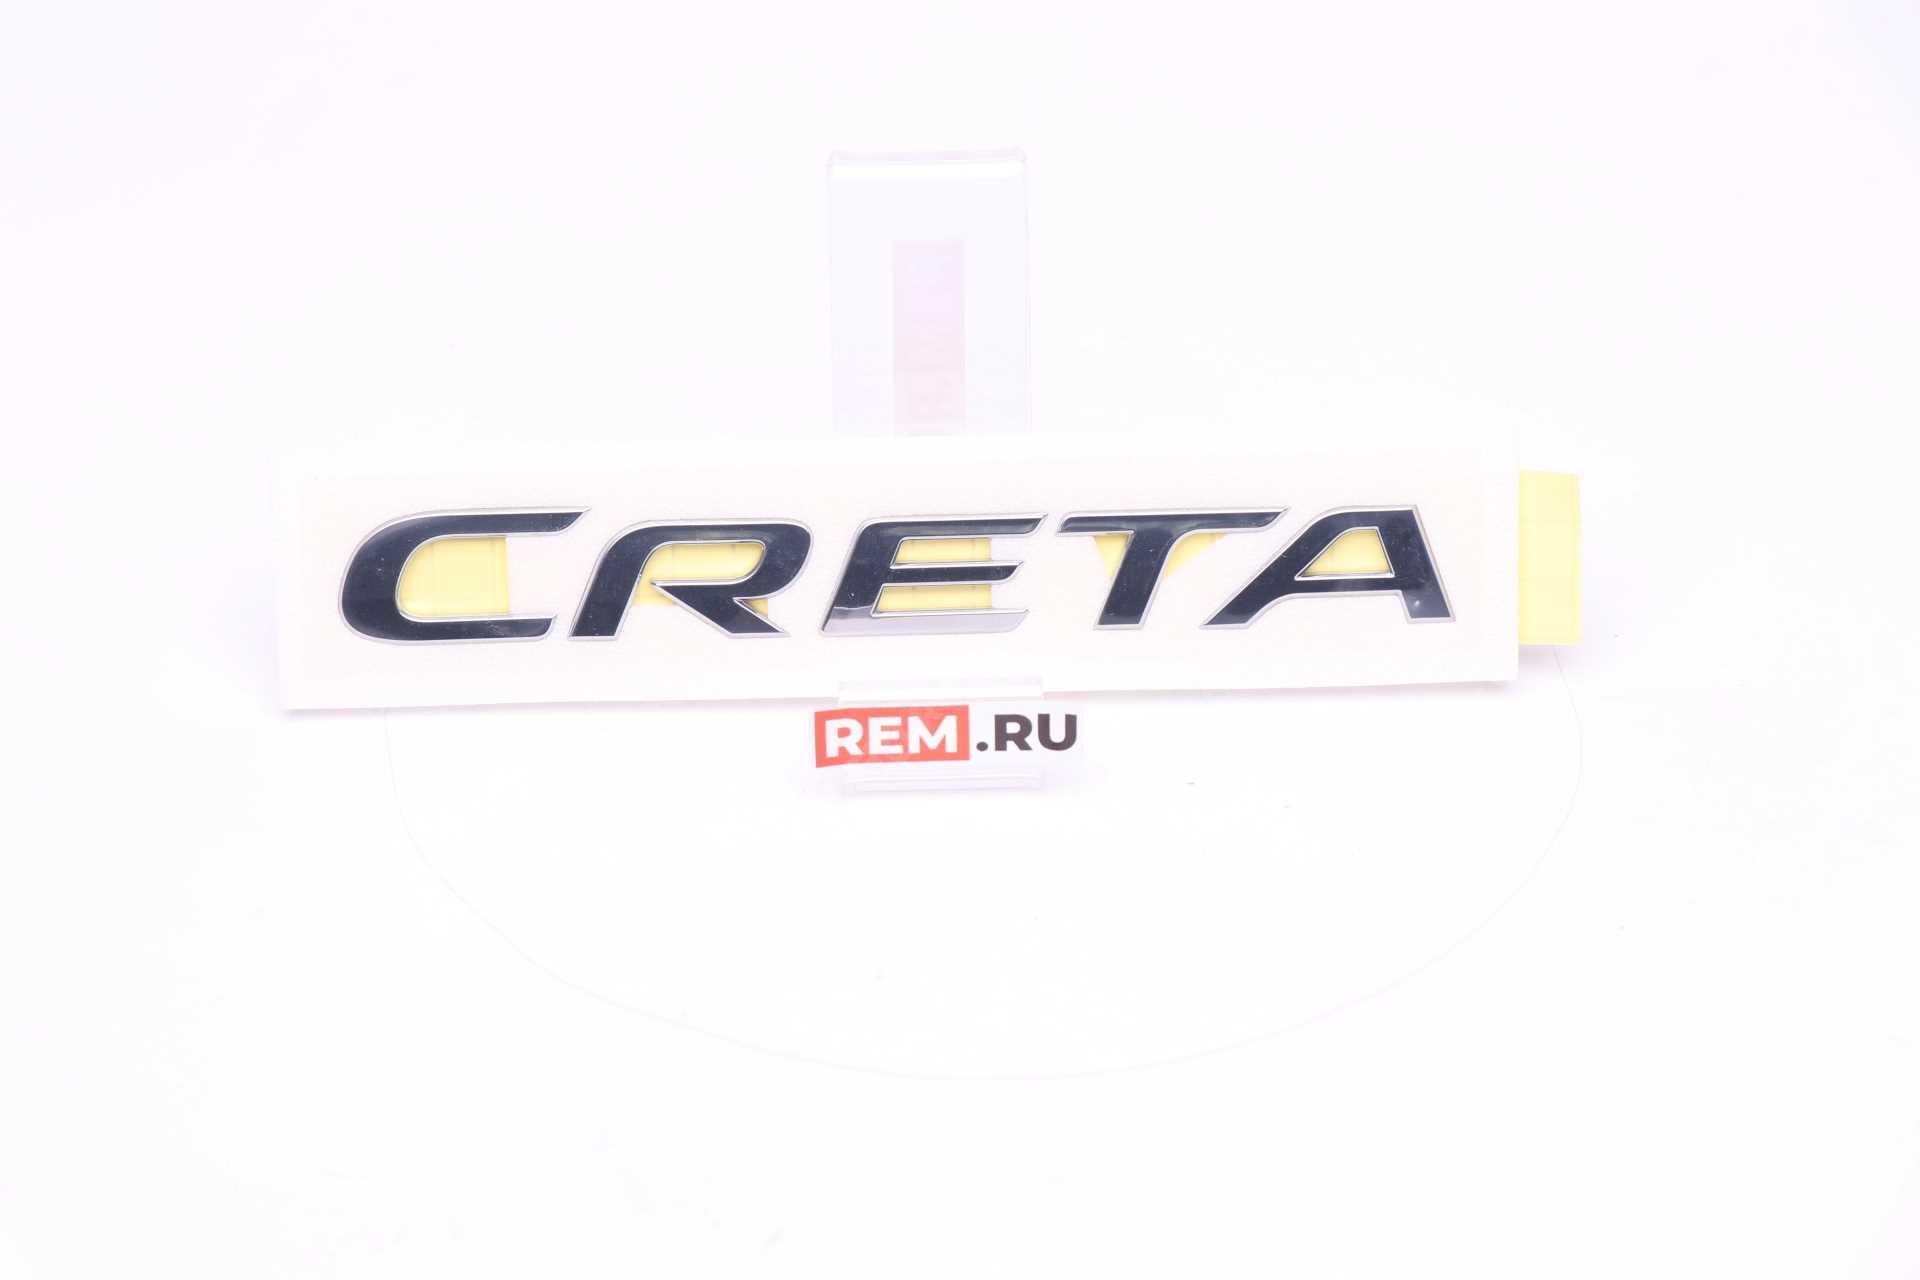  86310A0000 эмблема "creta"